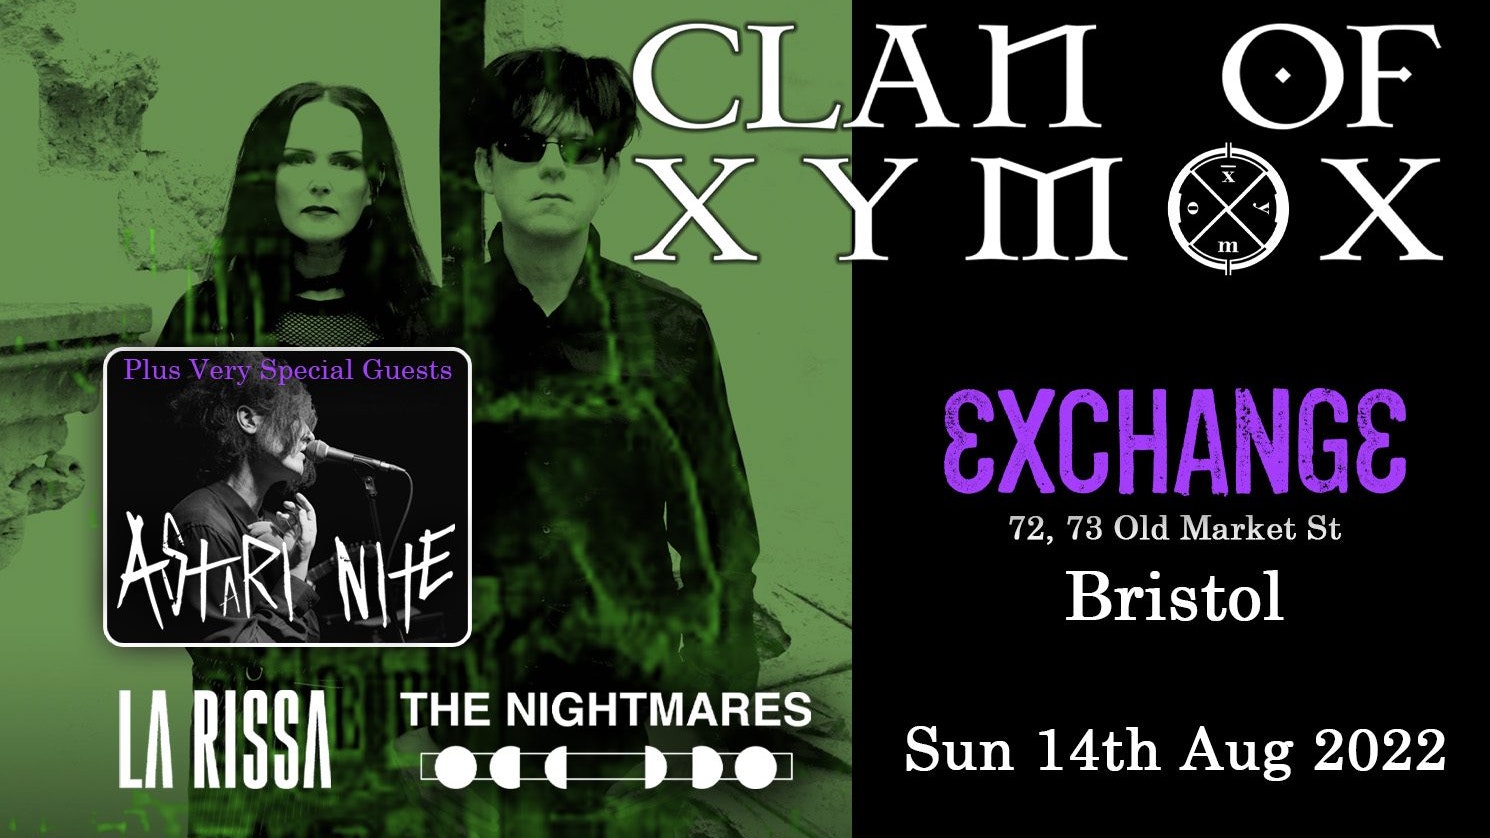 CLAN OF XYMOX – 40th Anniversary UK Tour + Astari Nite + La Rissa & The Nightmares